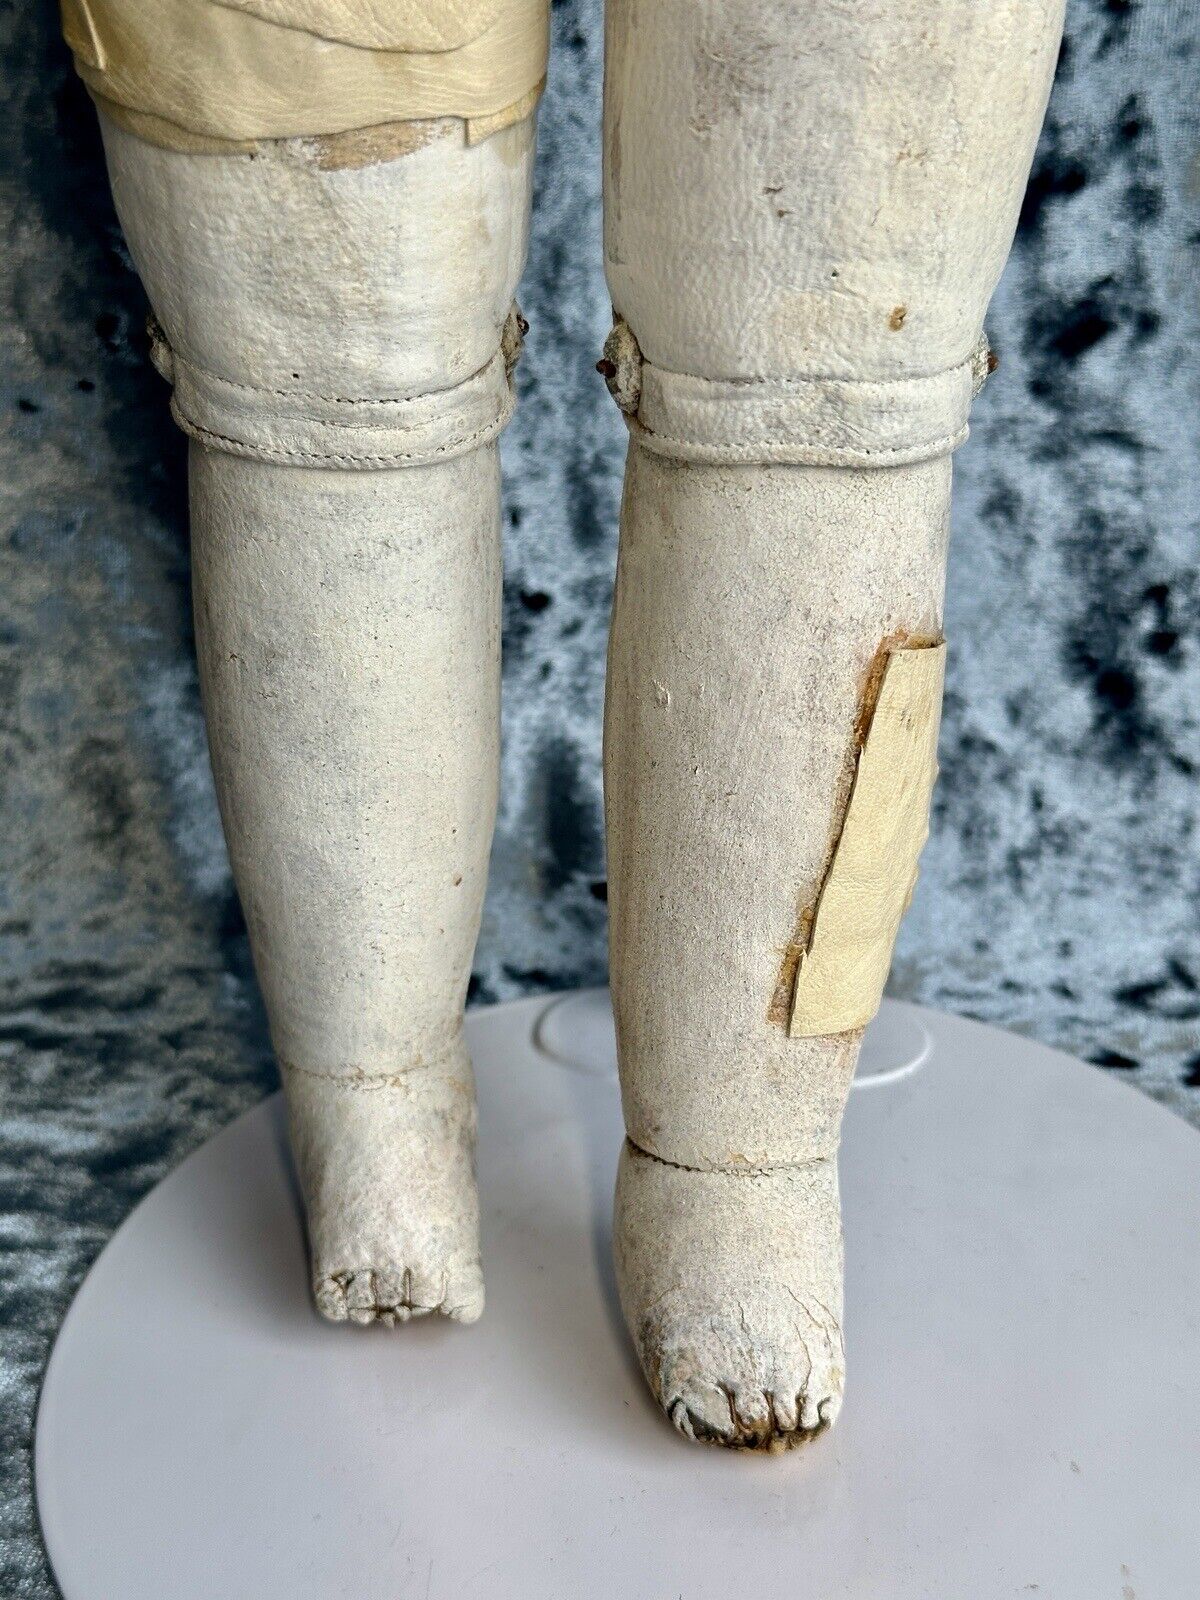 Antique German 20.5” Simon Halbig 1040 Bisque Shoulder Head Doll